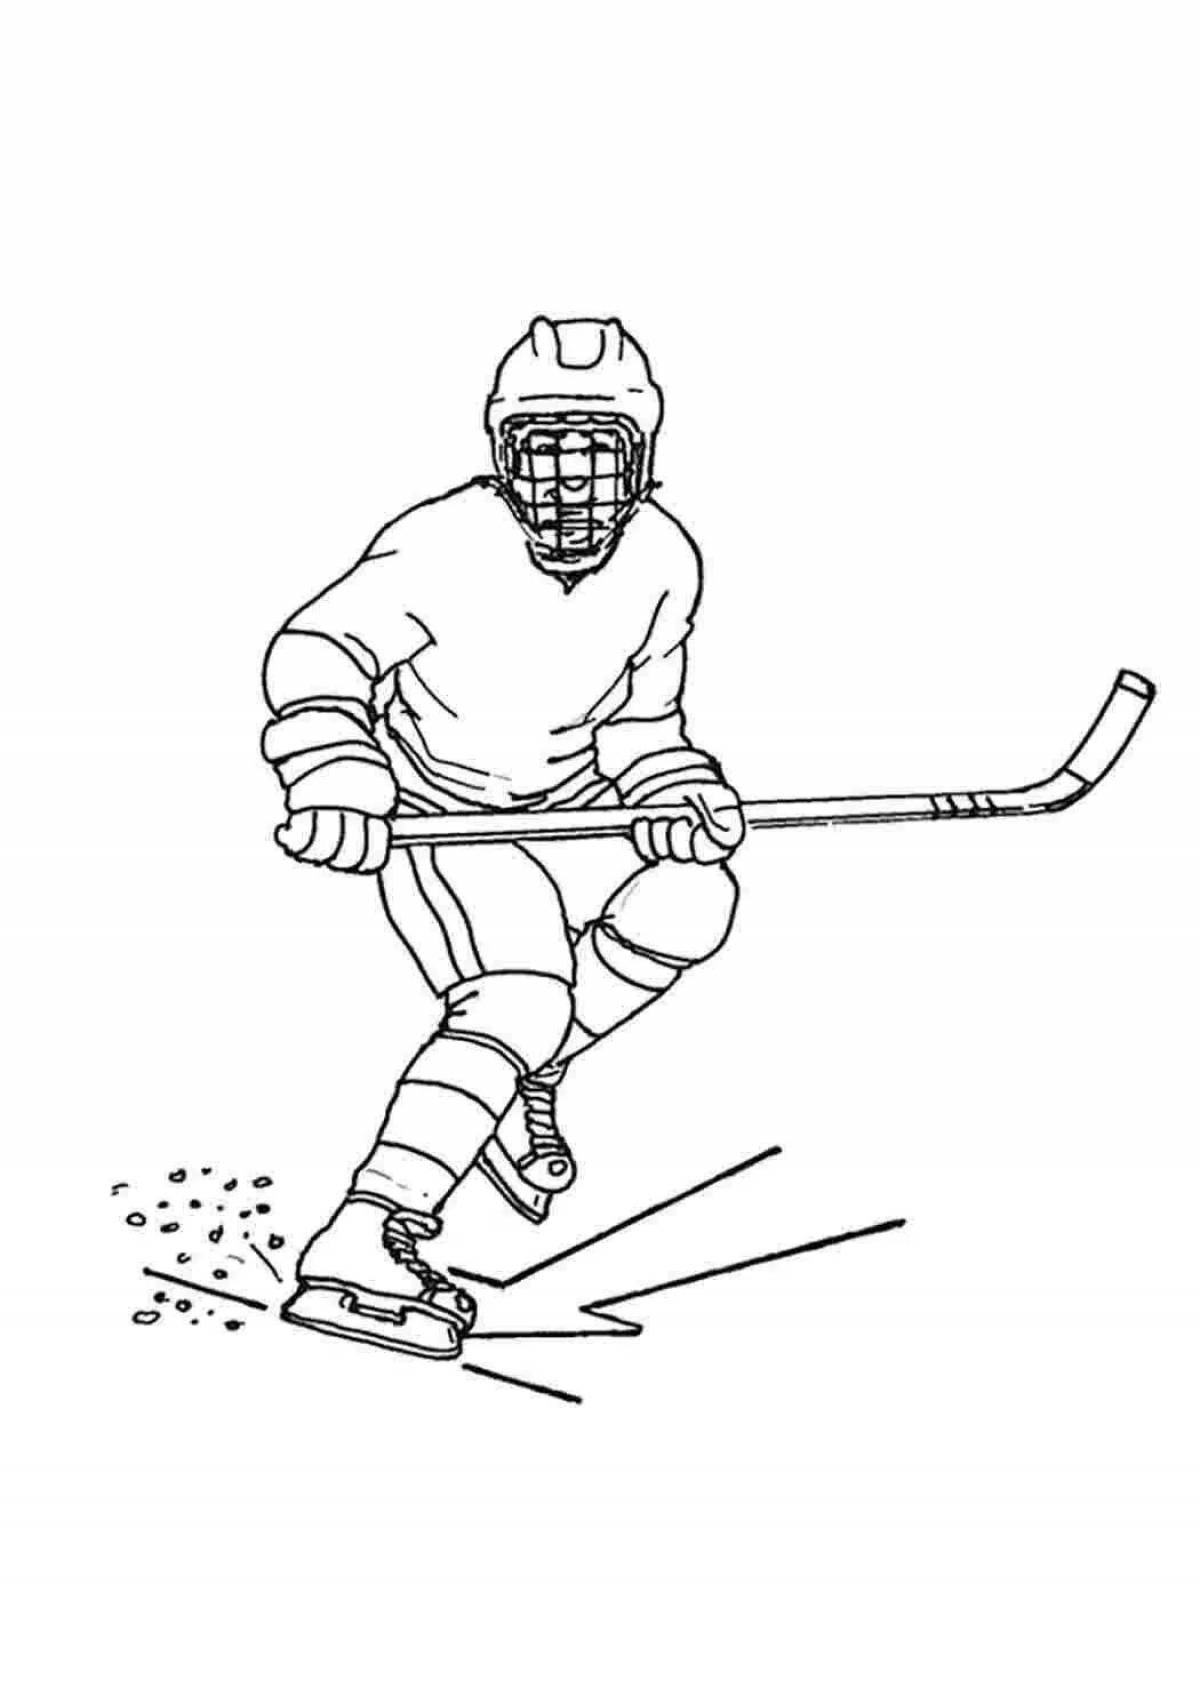 Joyful hockey coloring book